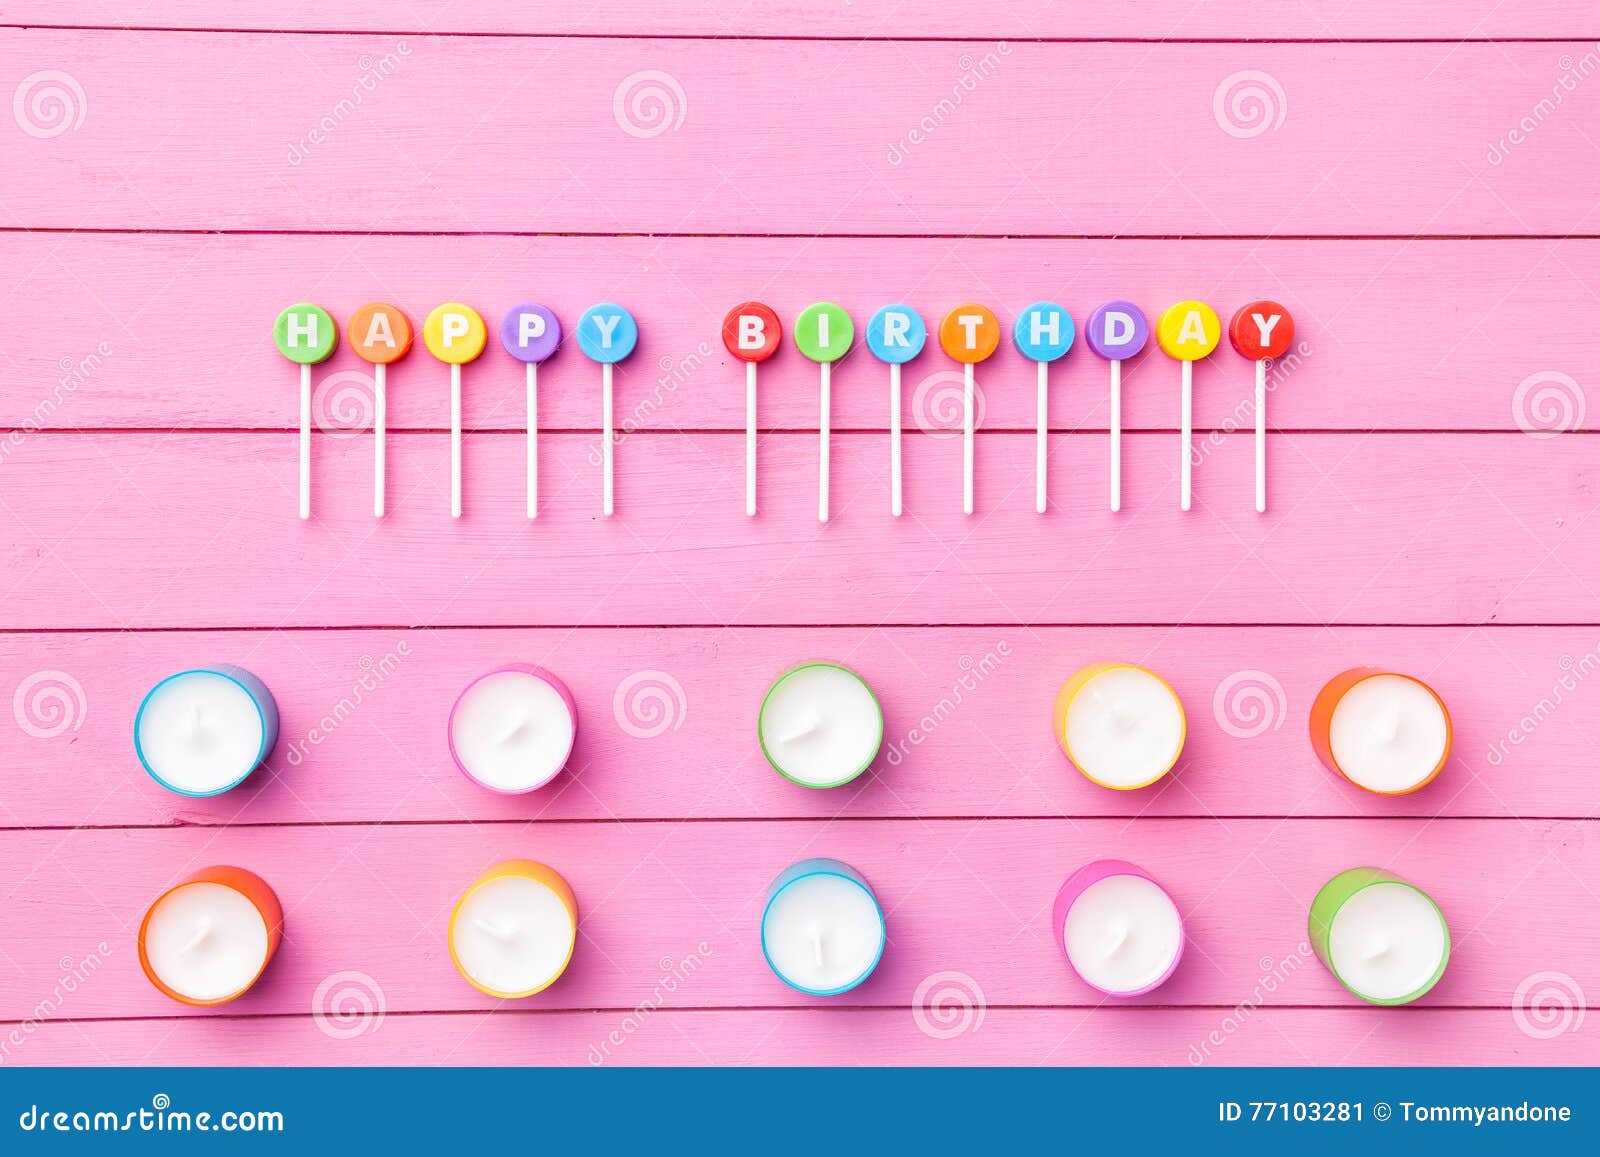 Colorful Happy Birthday Background Stock Image - Image of assortment ...